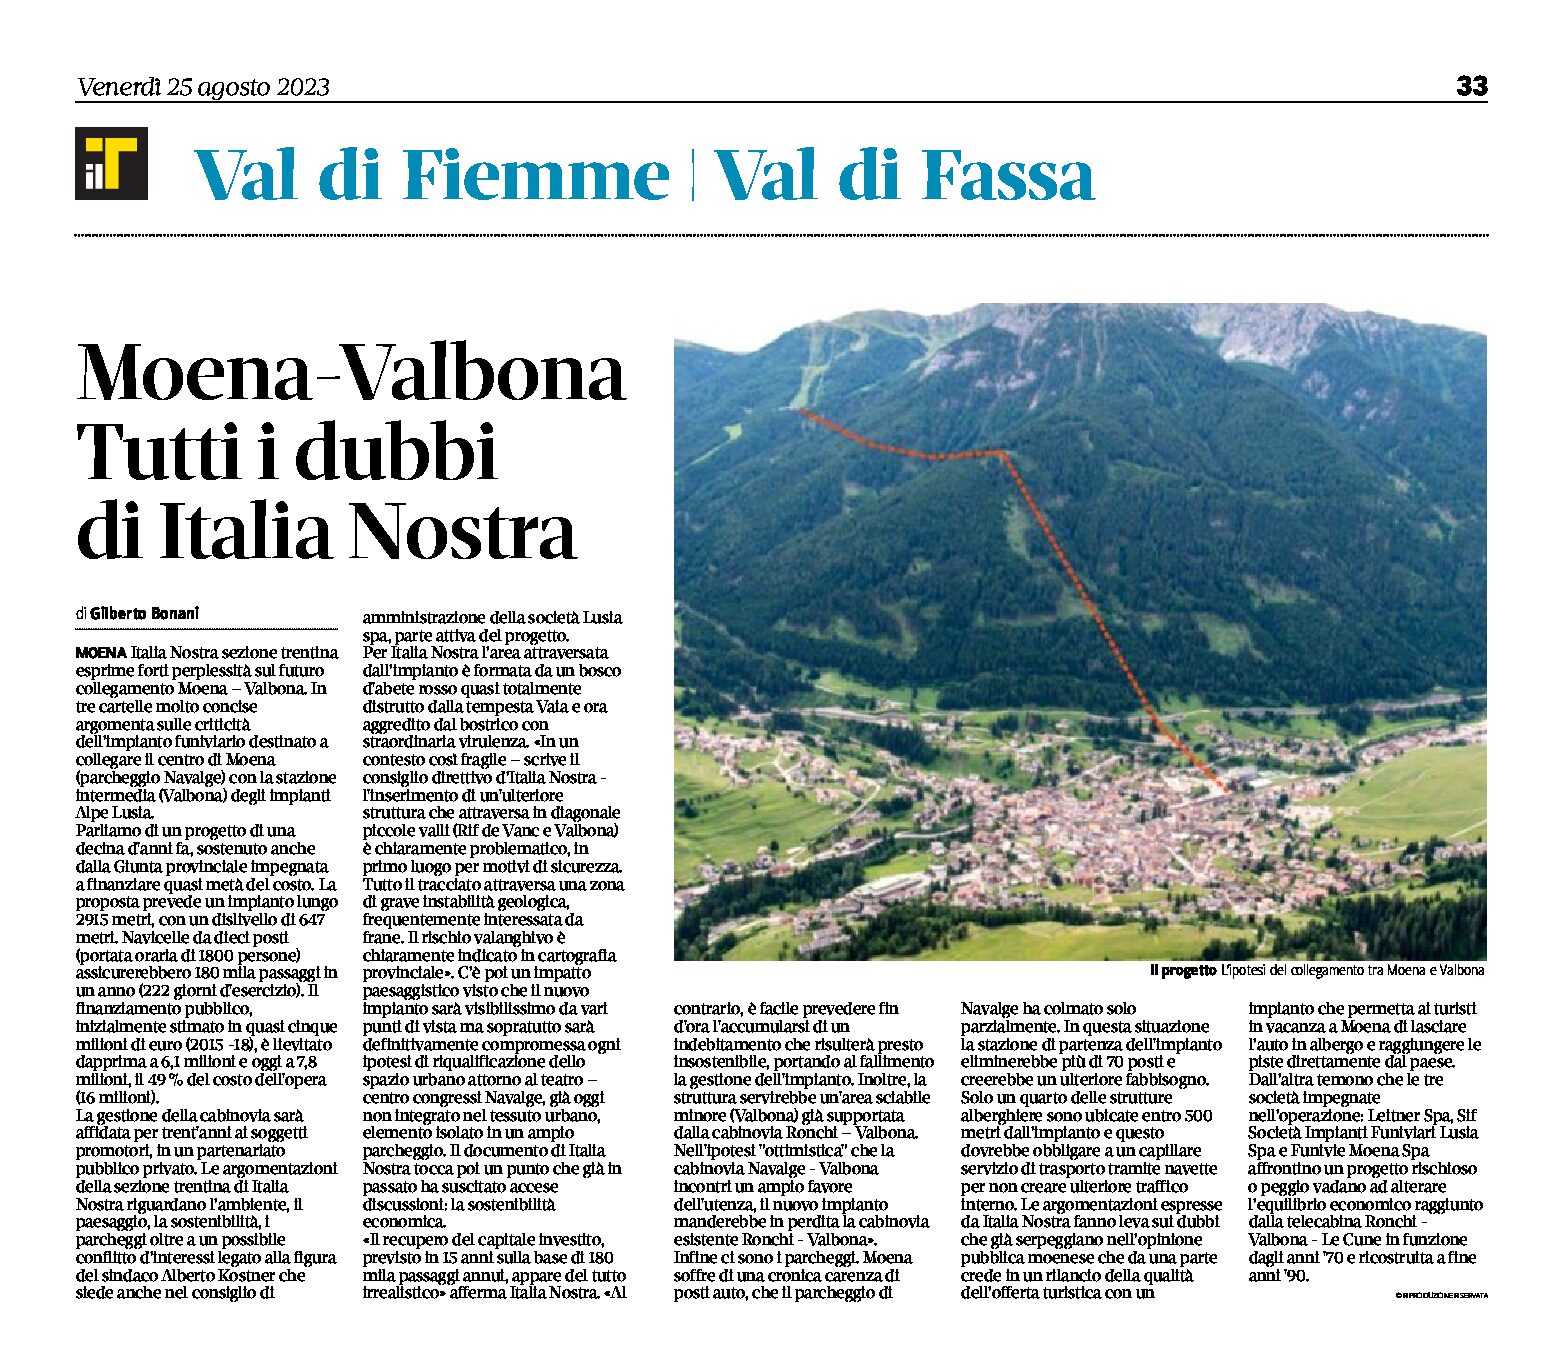 Funivia Moena-Valbona: tutti i dubbi di Italia Nostra